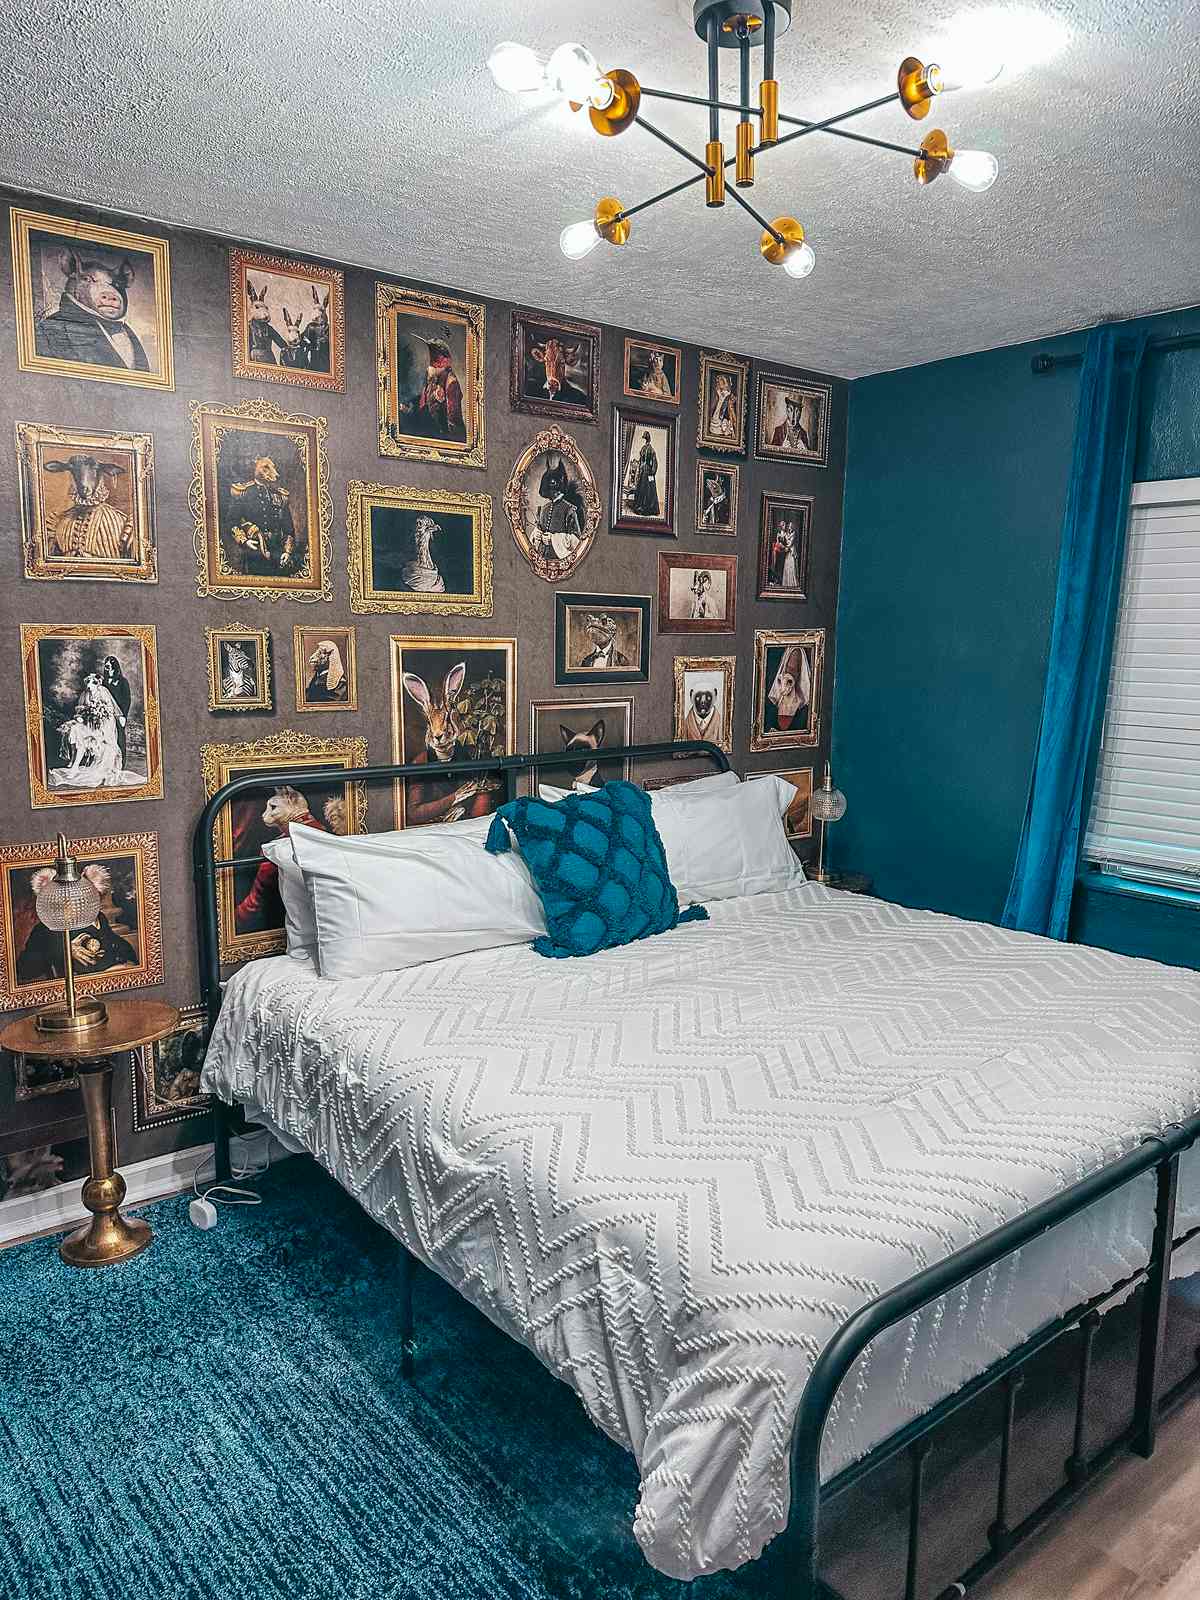 Tampa vacation rental bedroom